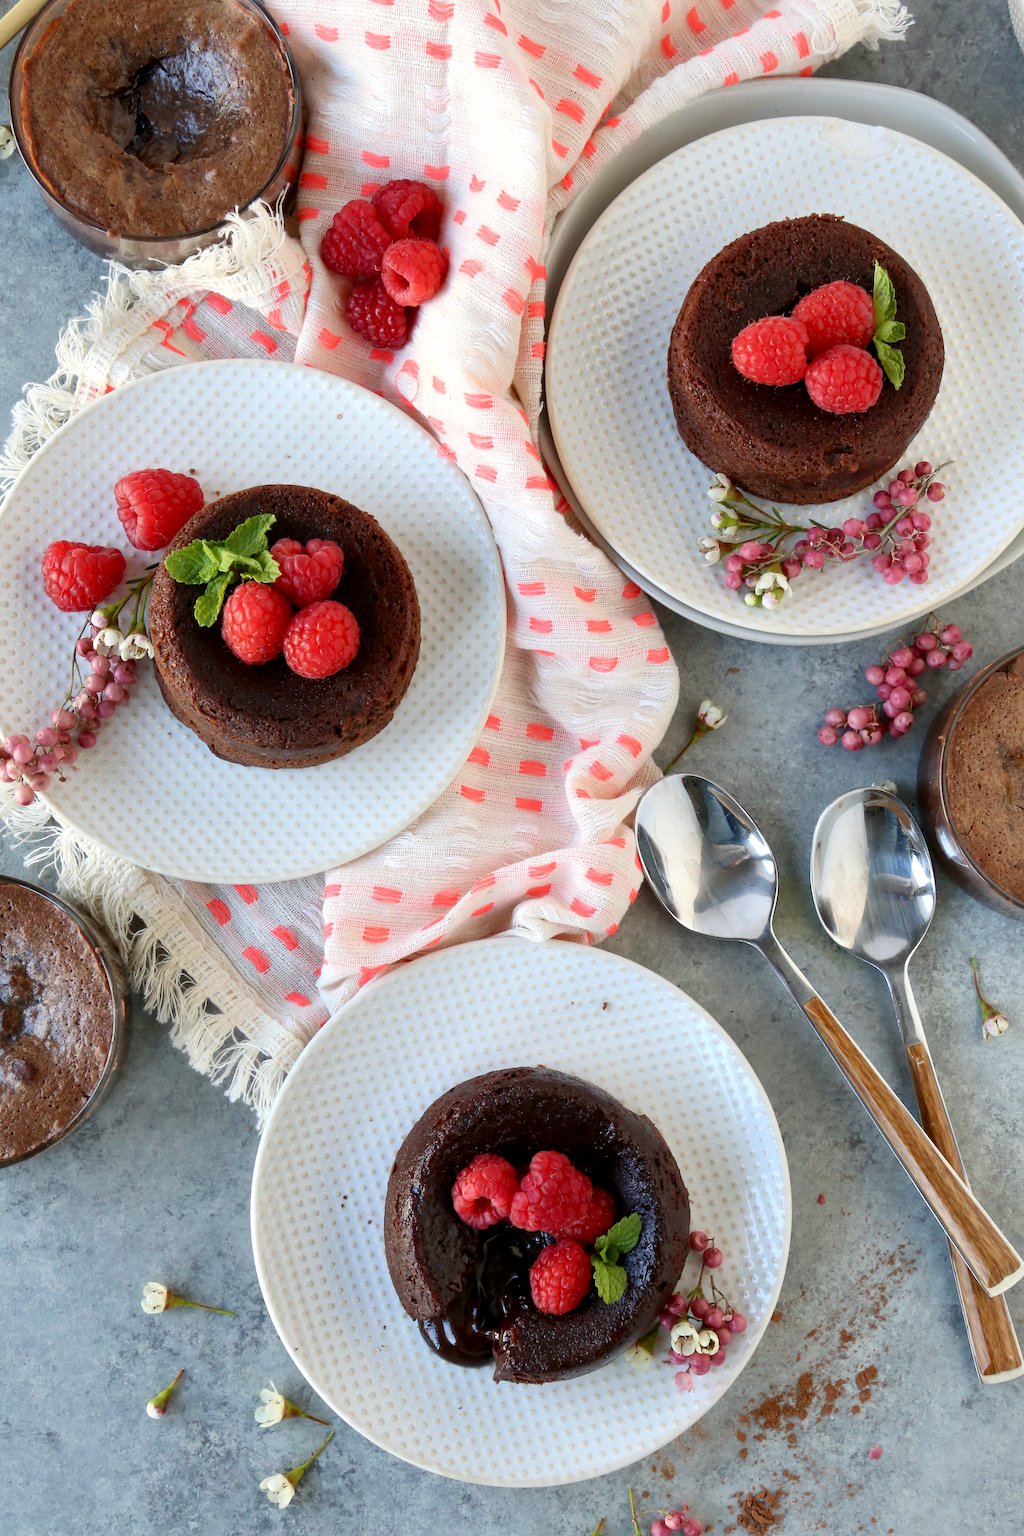 three chocolate cakes on dessert plates garnished with raspberries